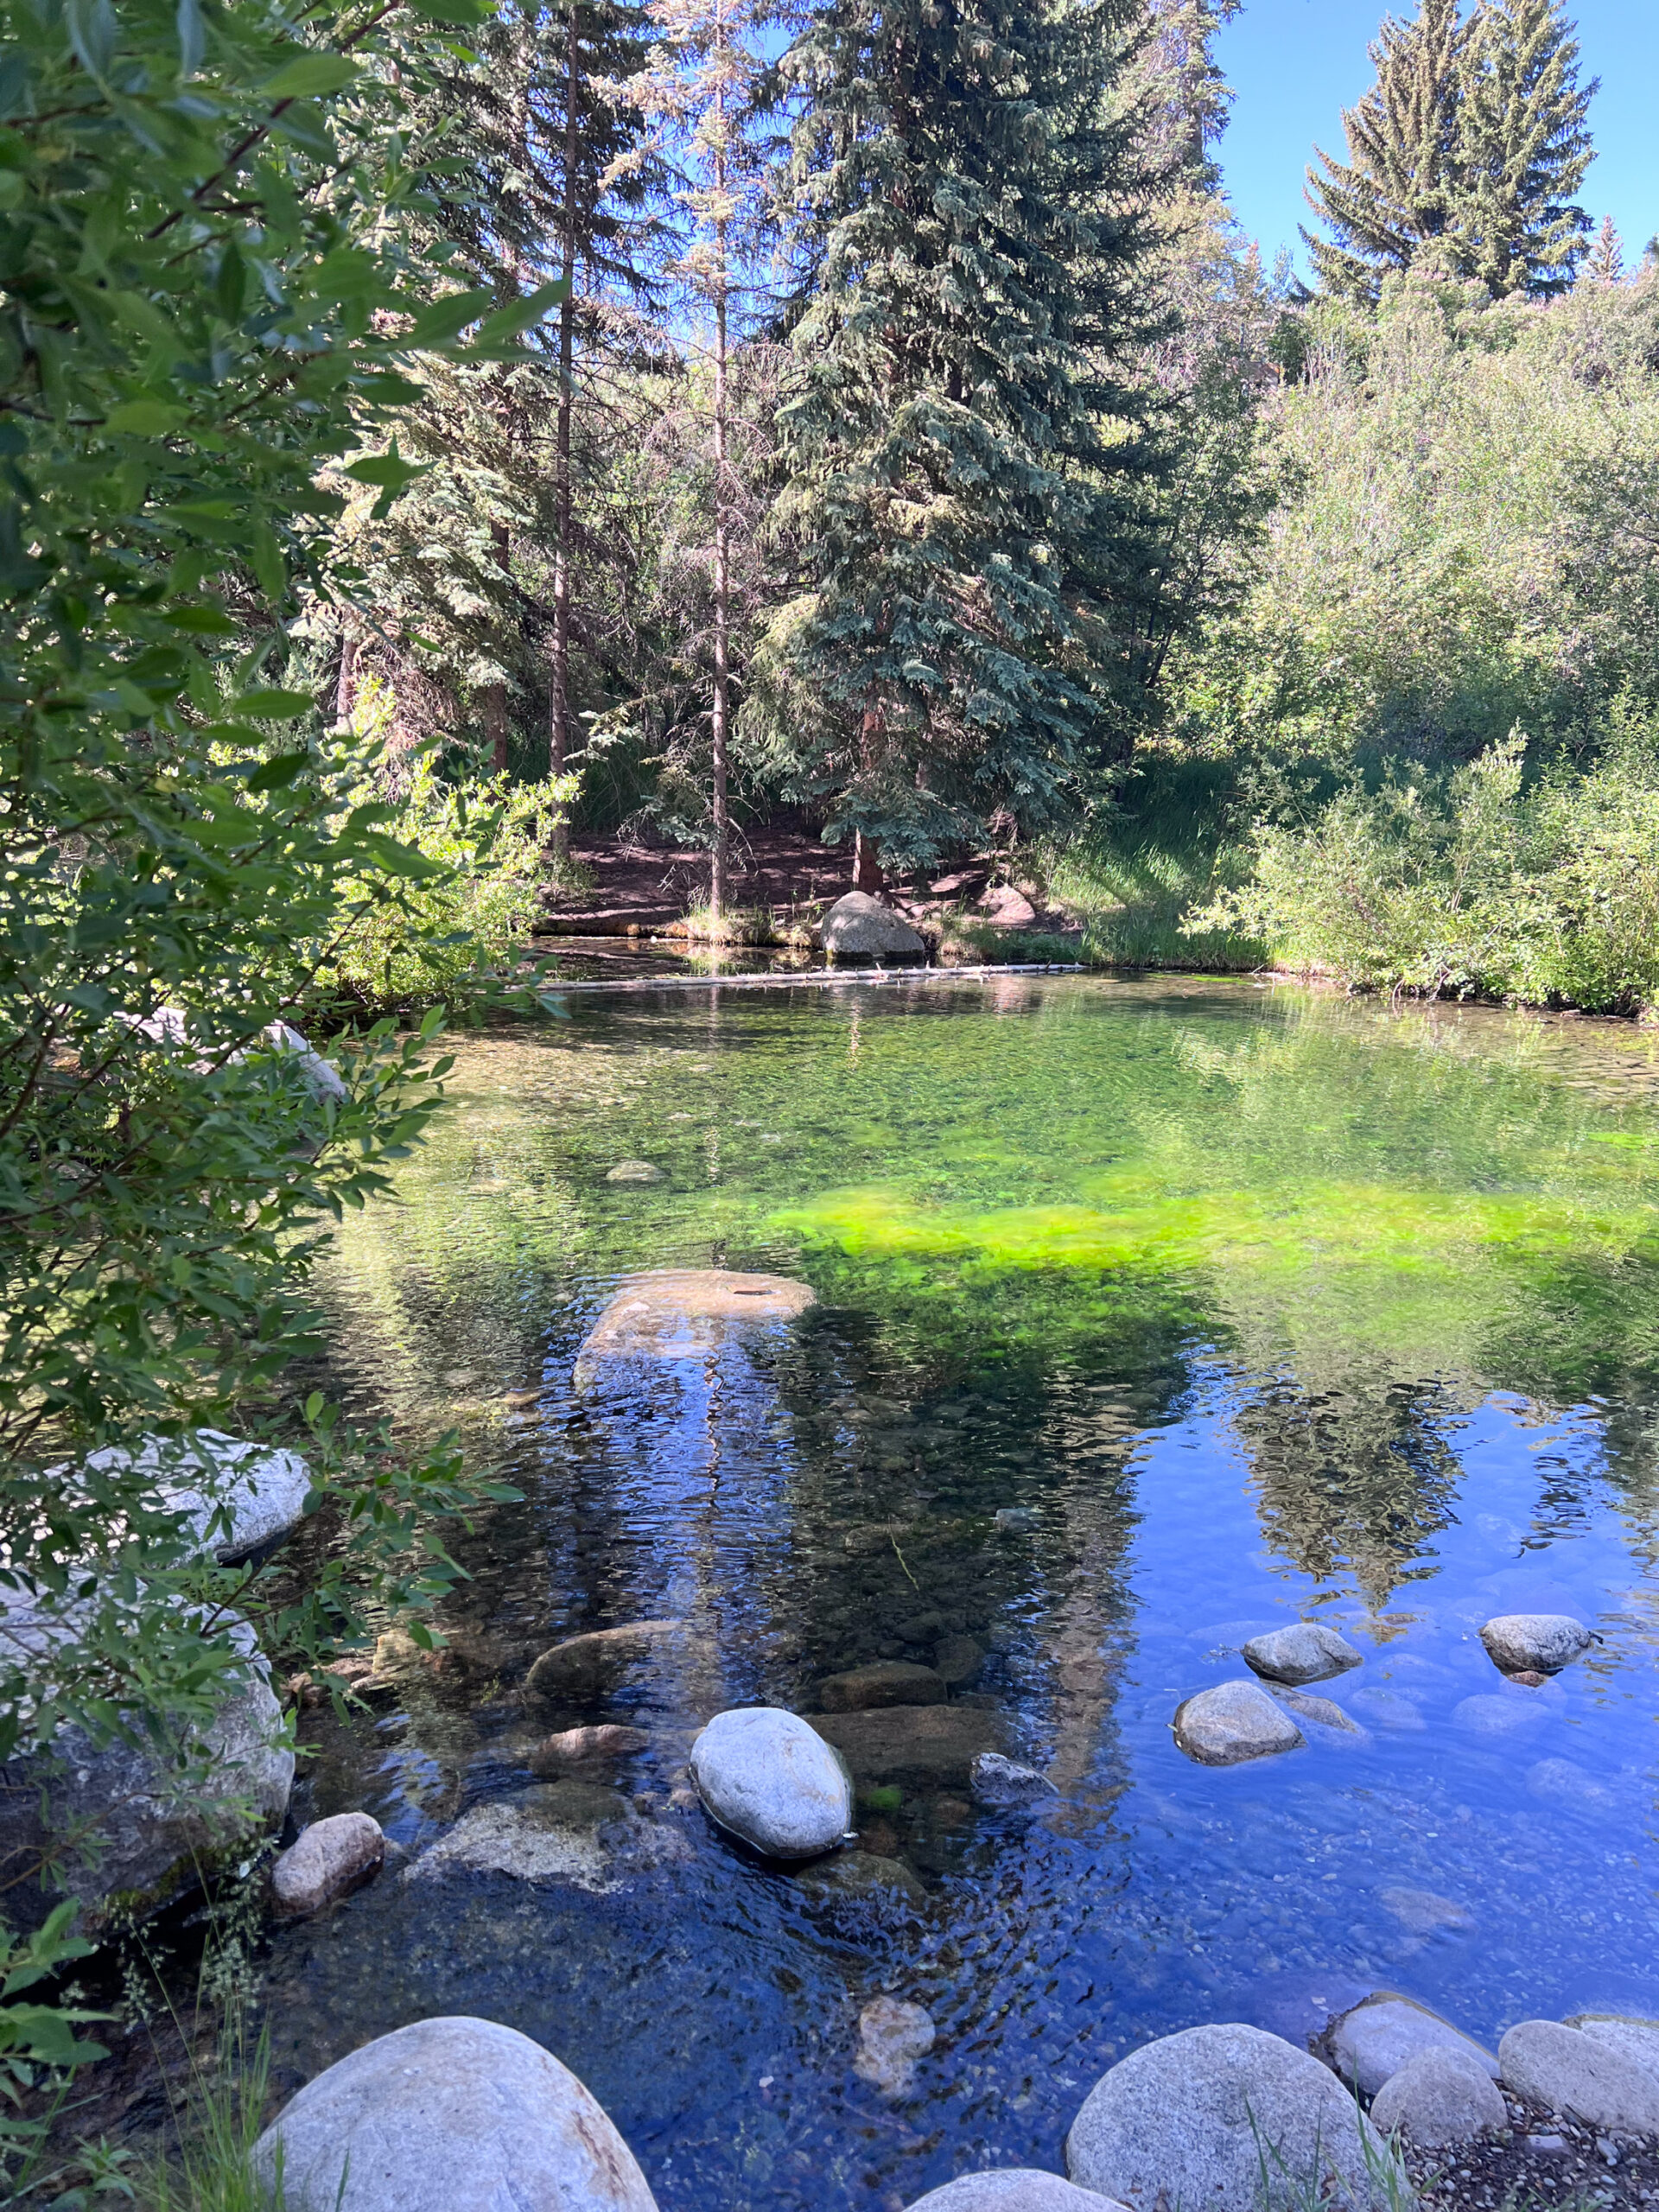 Explore Hallam Lake at the local ACES nature preserve in Aspen, Colorado. #familytravel #scienceandnature #aspencolorado